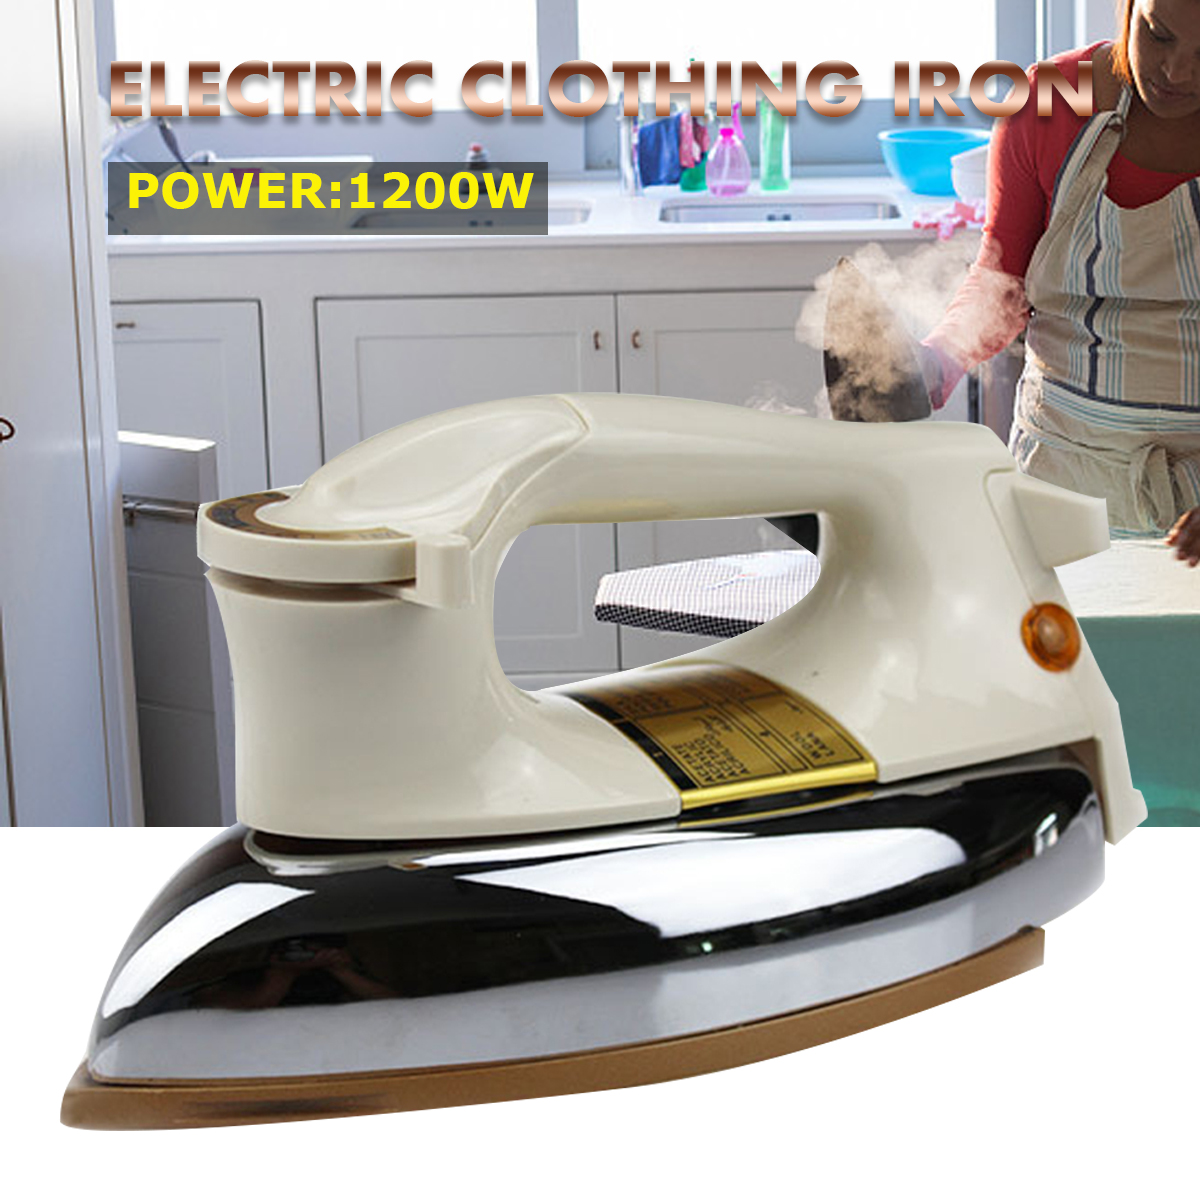 Handheld Steam Iron Electric Ironing Machine Portable Travel Home Cloth Garment Steamer